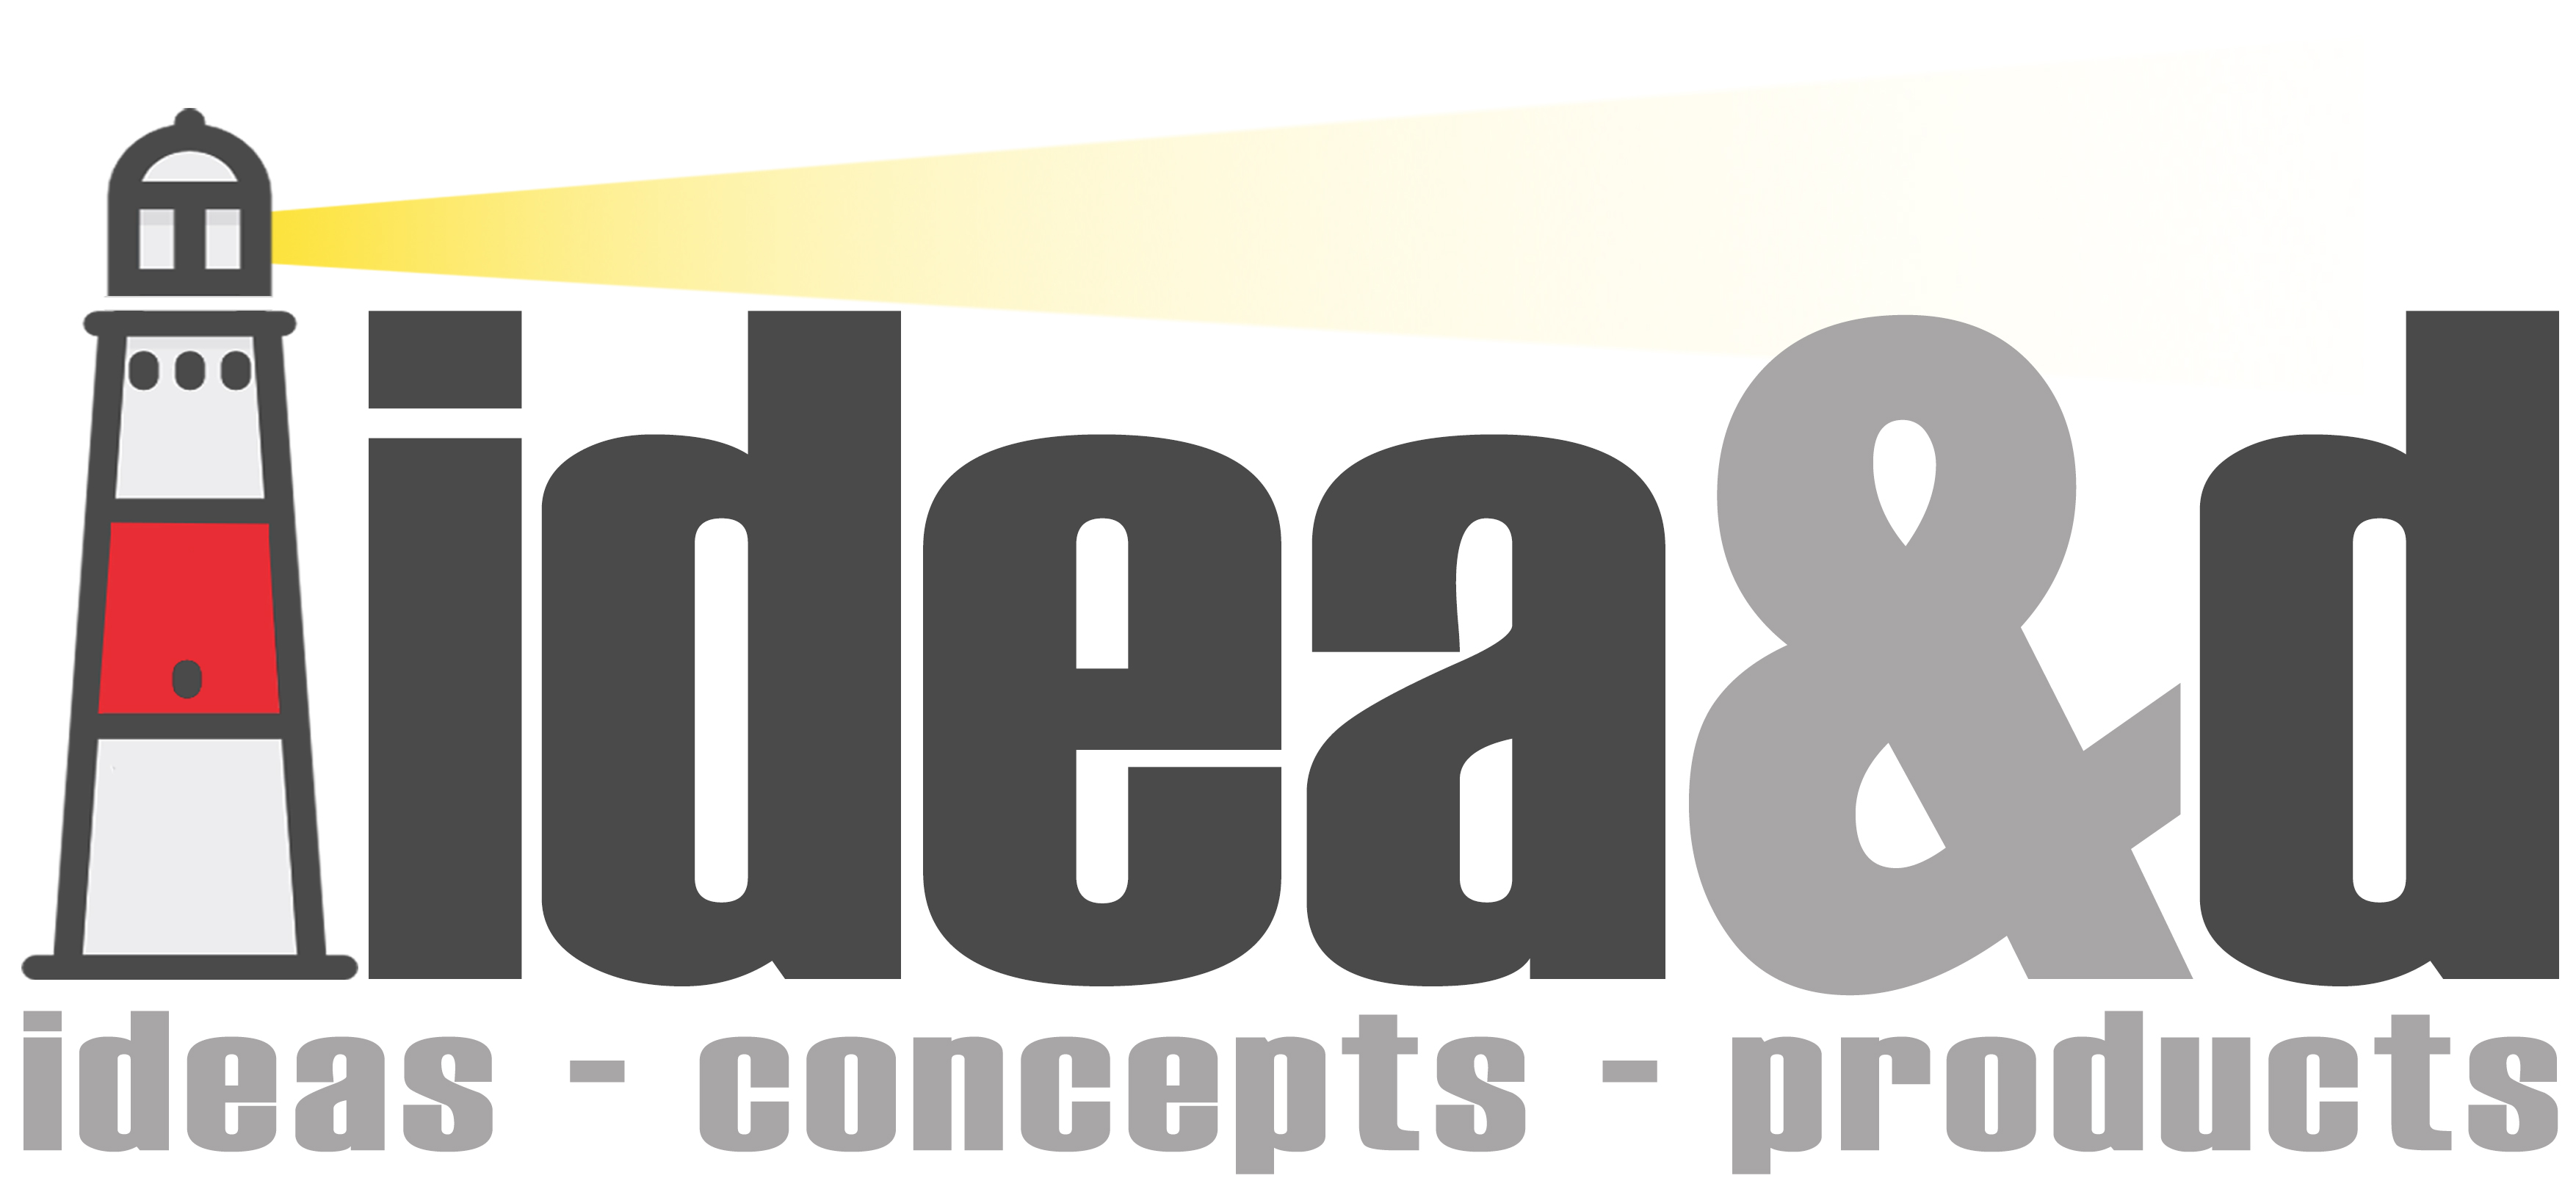 Idea's | Concepts | Product Development | Idea&d